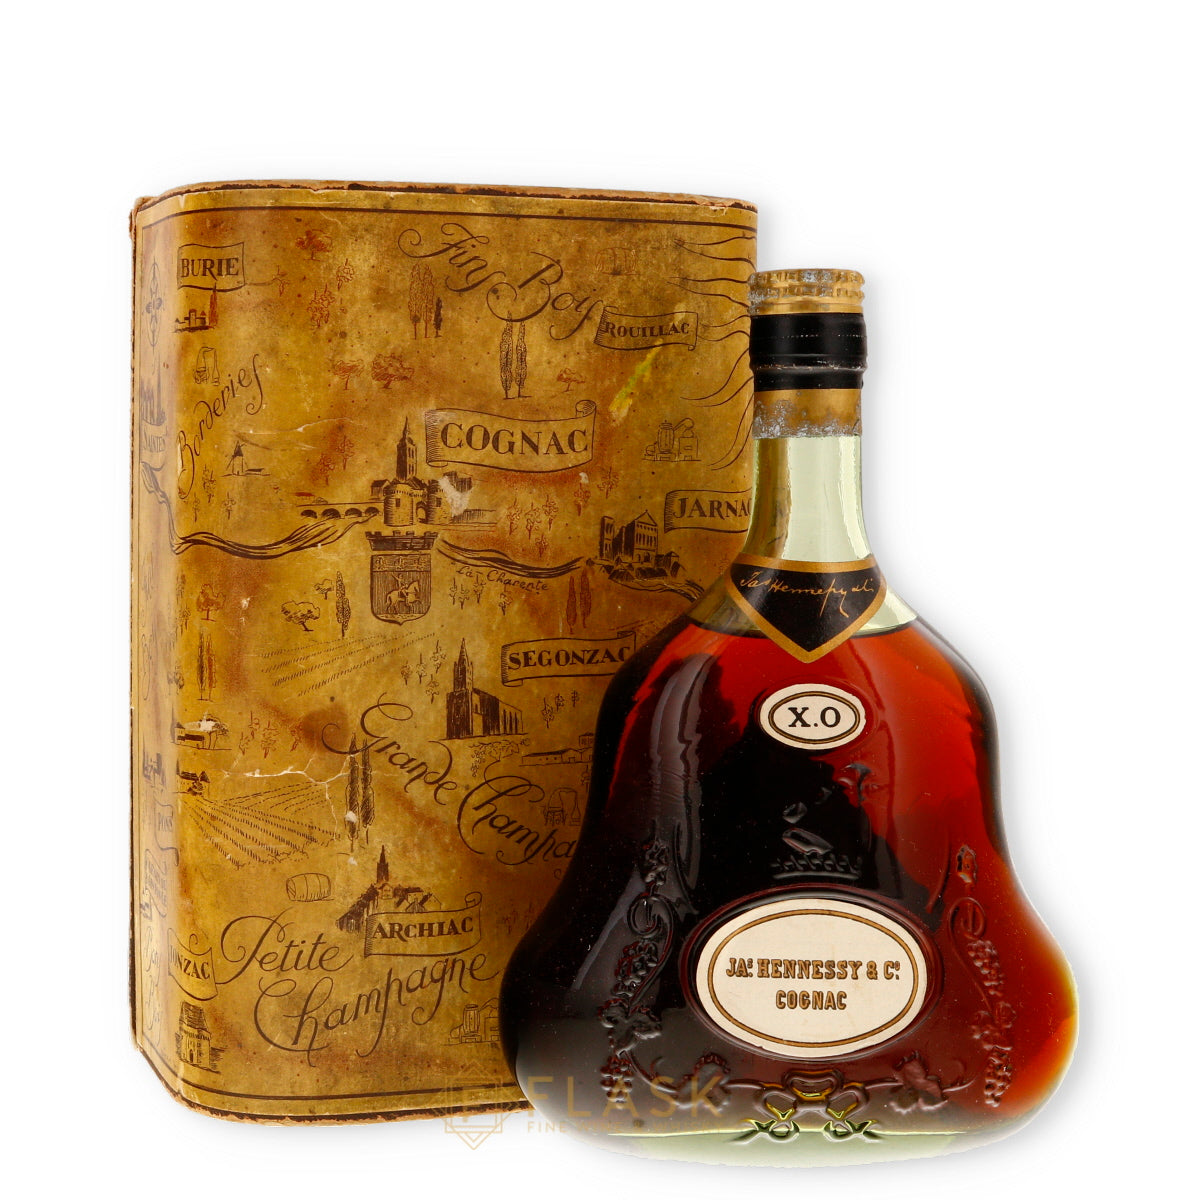 Hennessy XO Cognac Holidays Gift Box - Cognac Hennessy